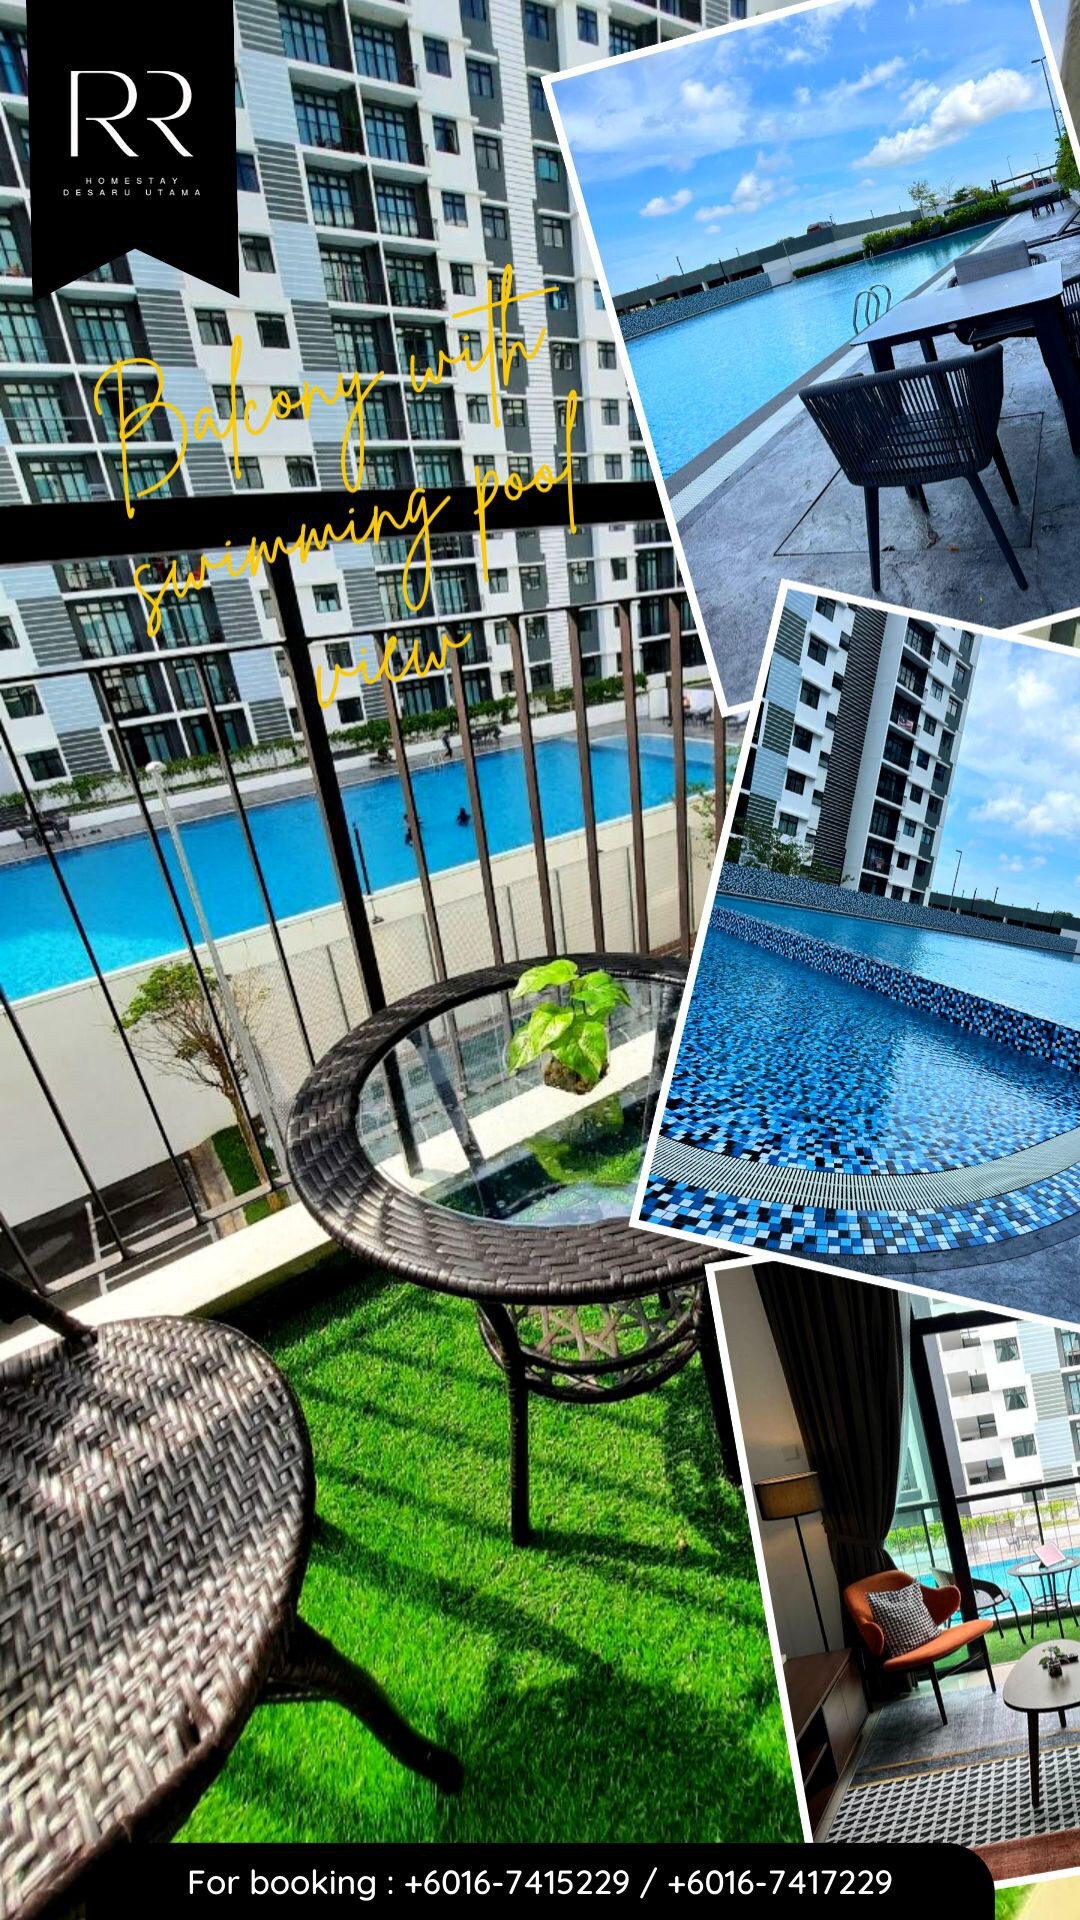 RR Homestay Desaru Utama with pool view